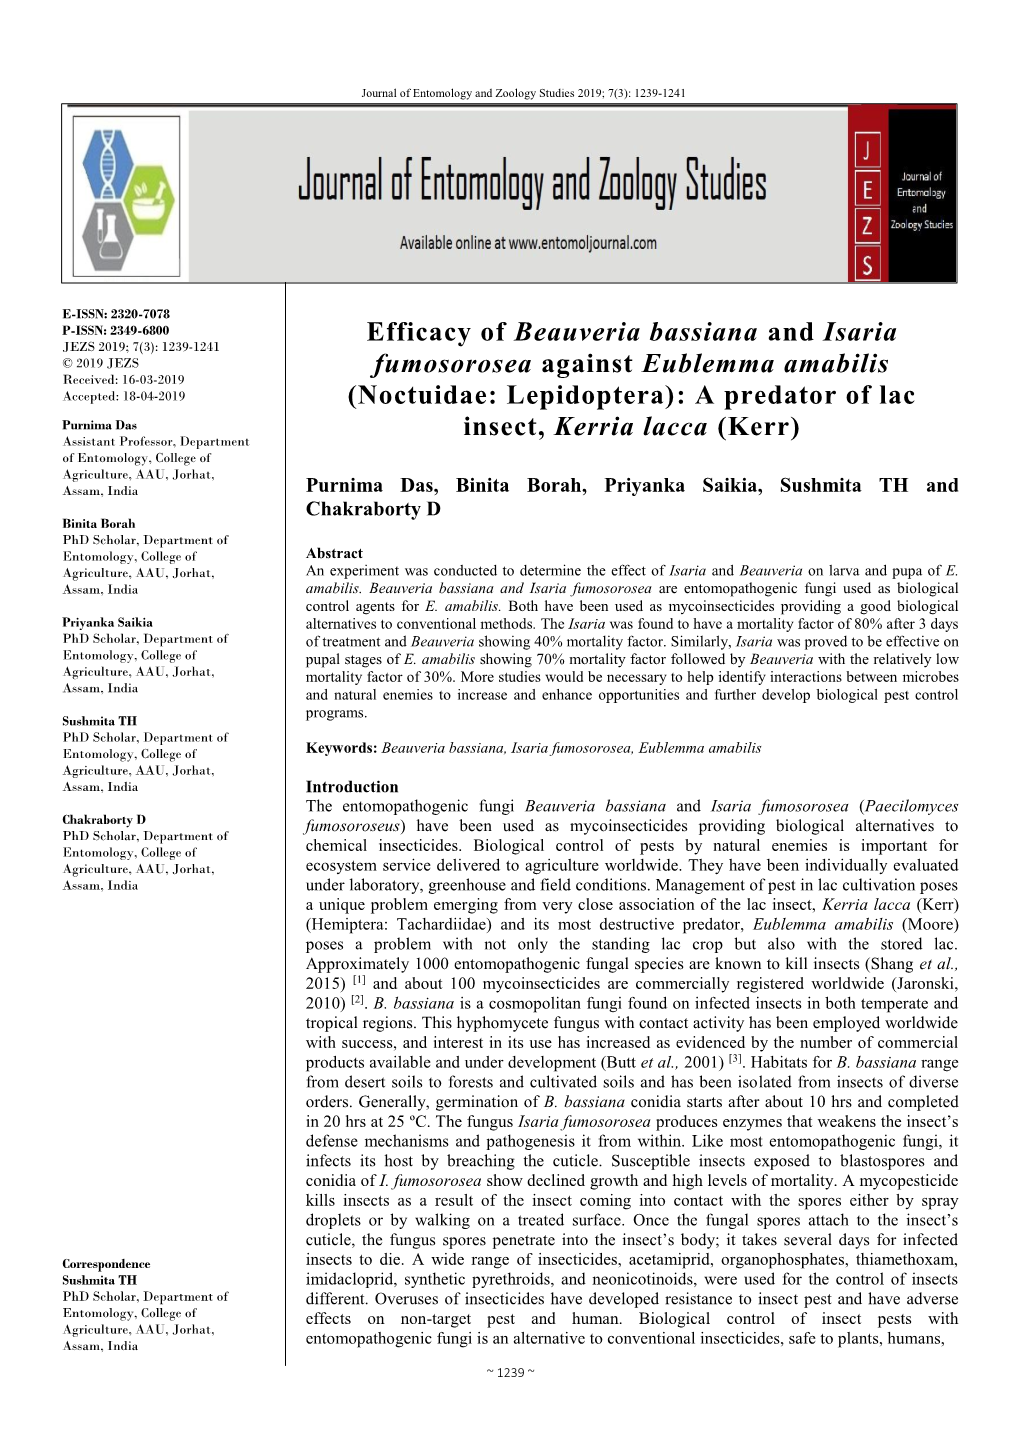 Efficacy of Beauveria Bassiana and Isaria Fumosorosea Against